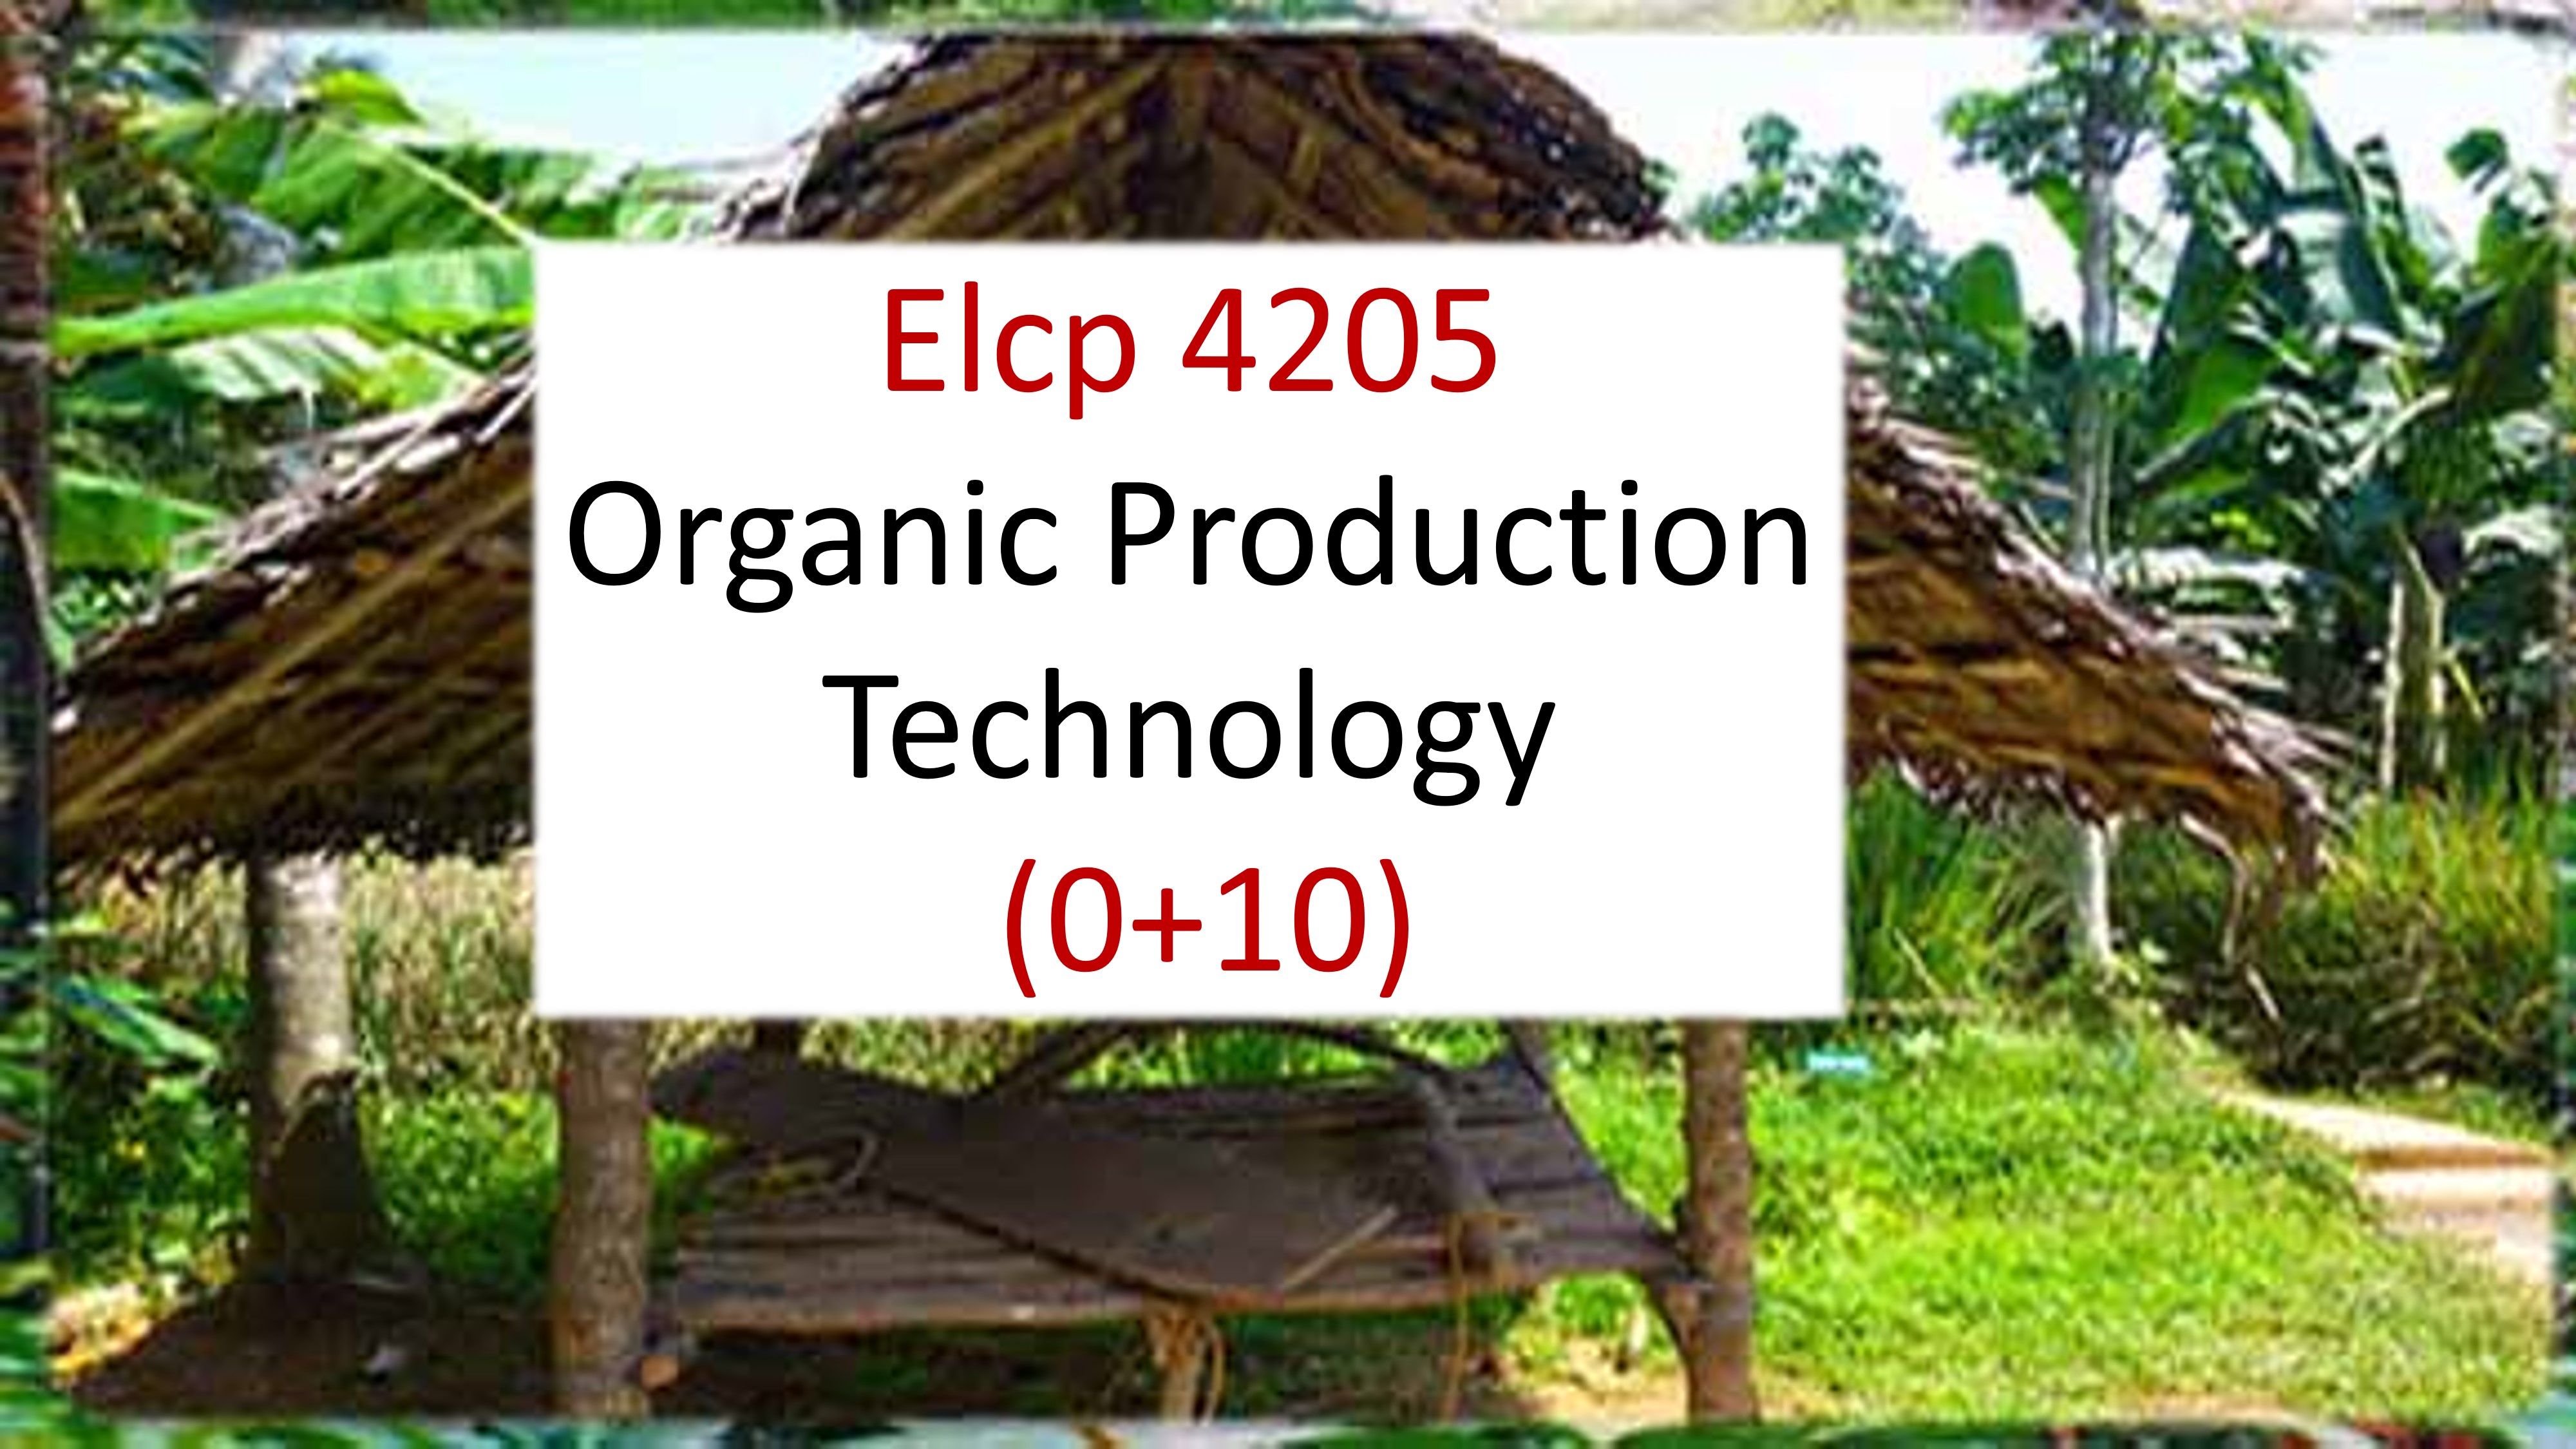 Elcp 4205 Organic production Technology (0+10), Semester 8/ 2016 UG